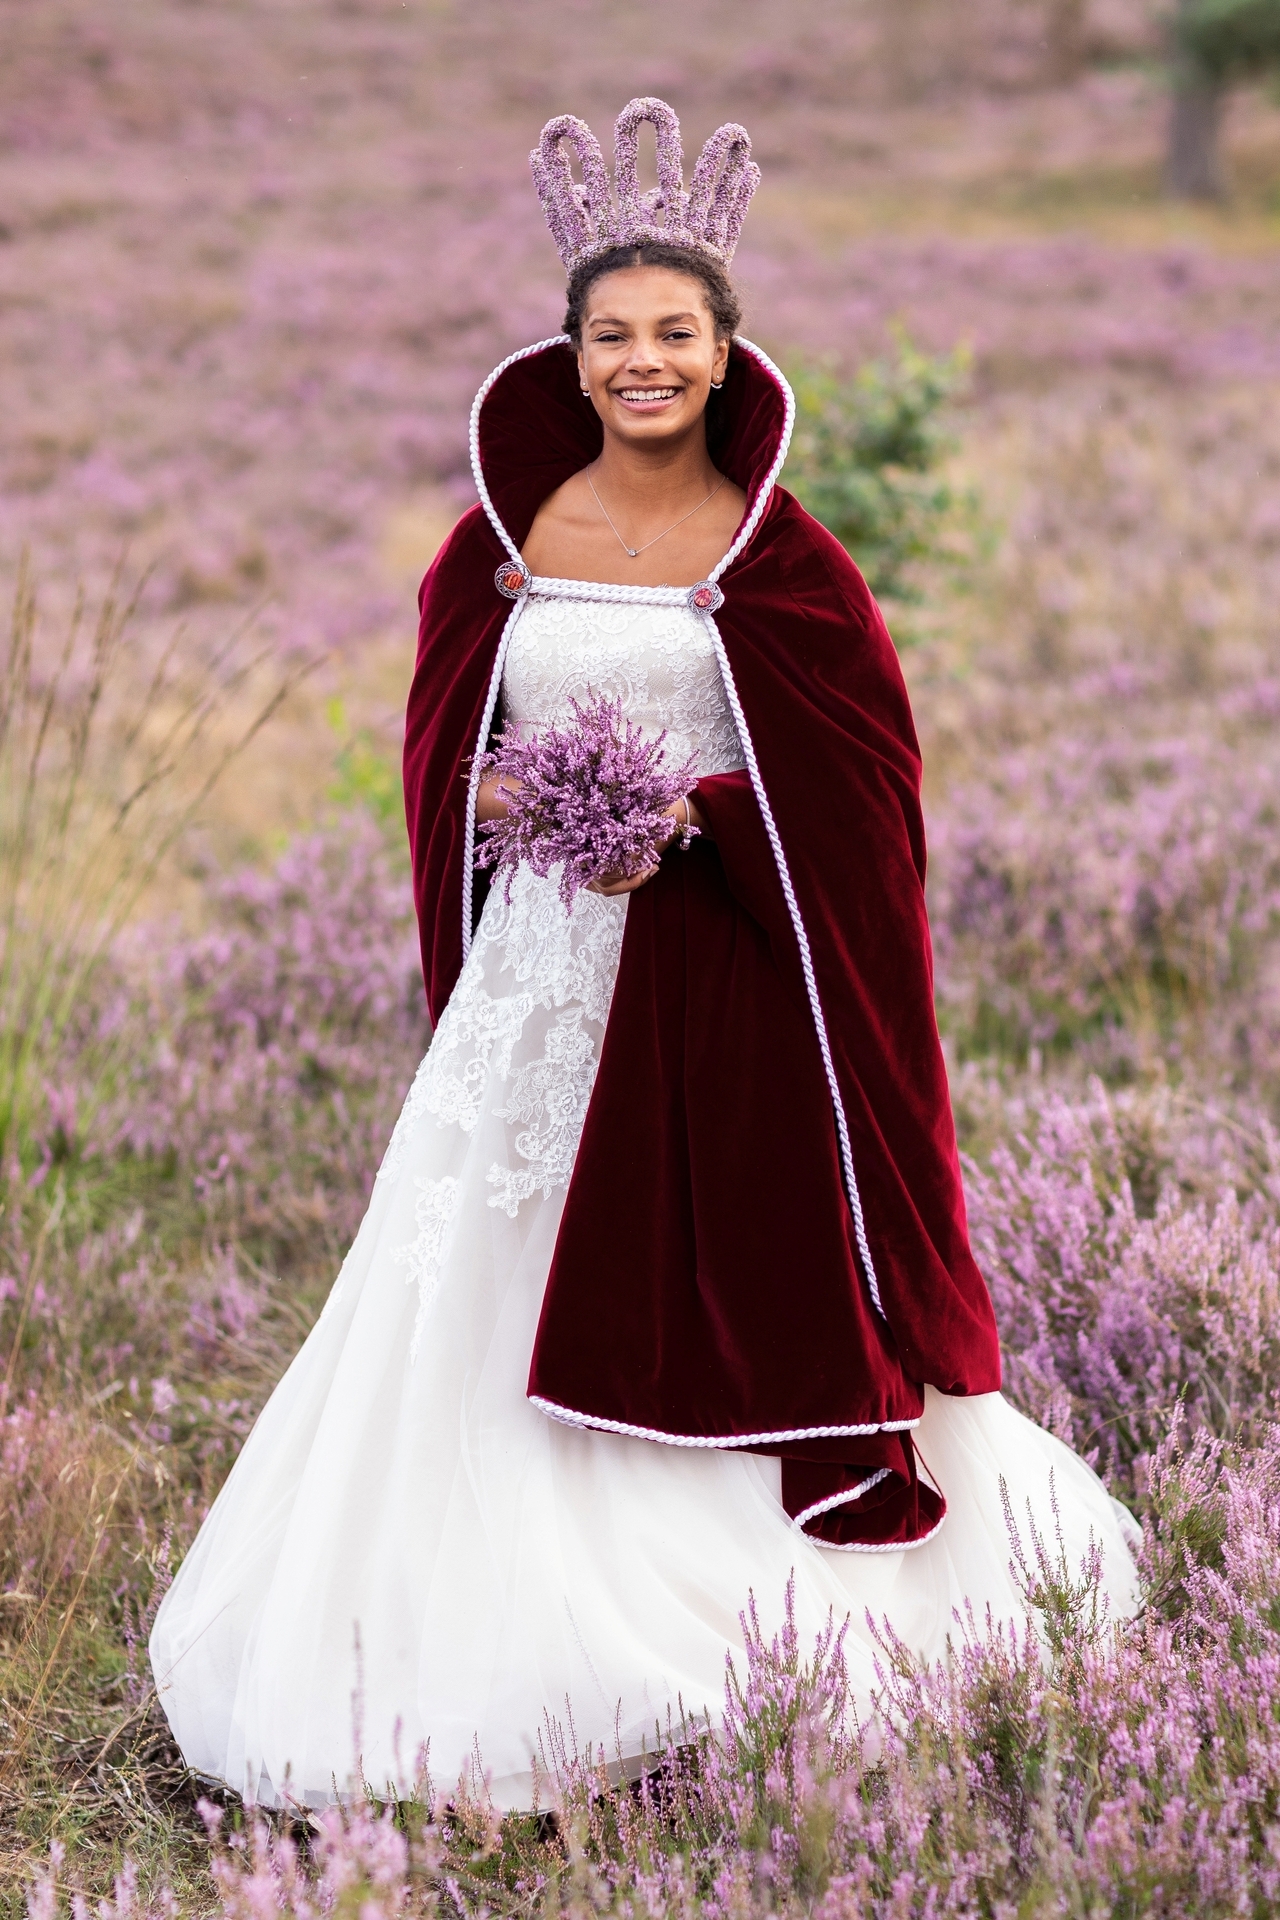 Bild: Heidekönigin 2019  Leonie Laryea